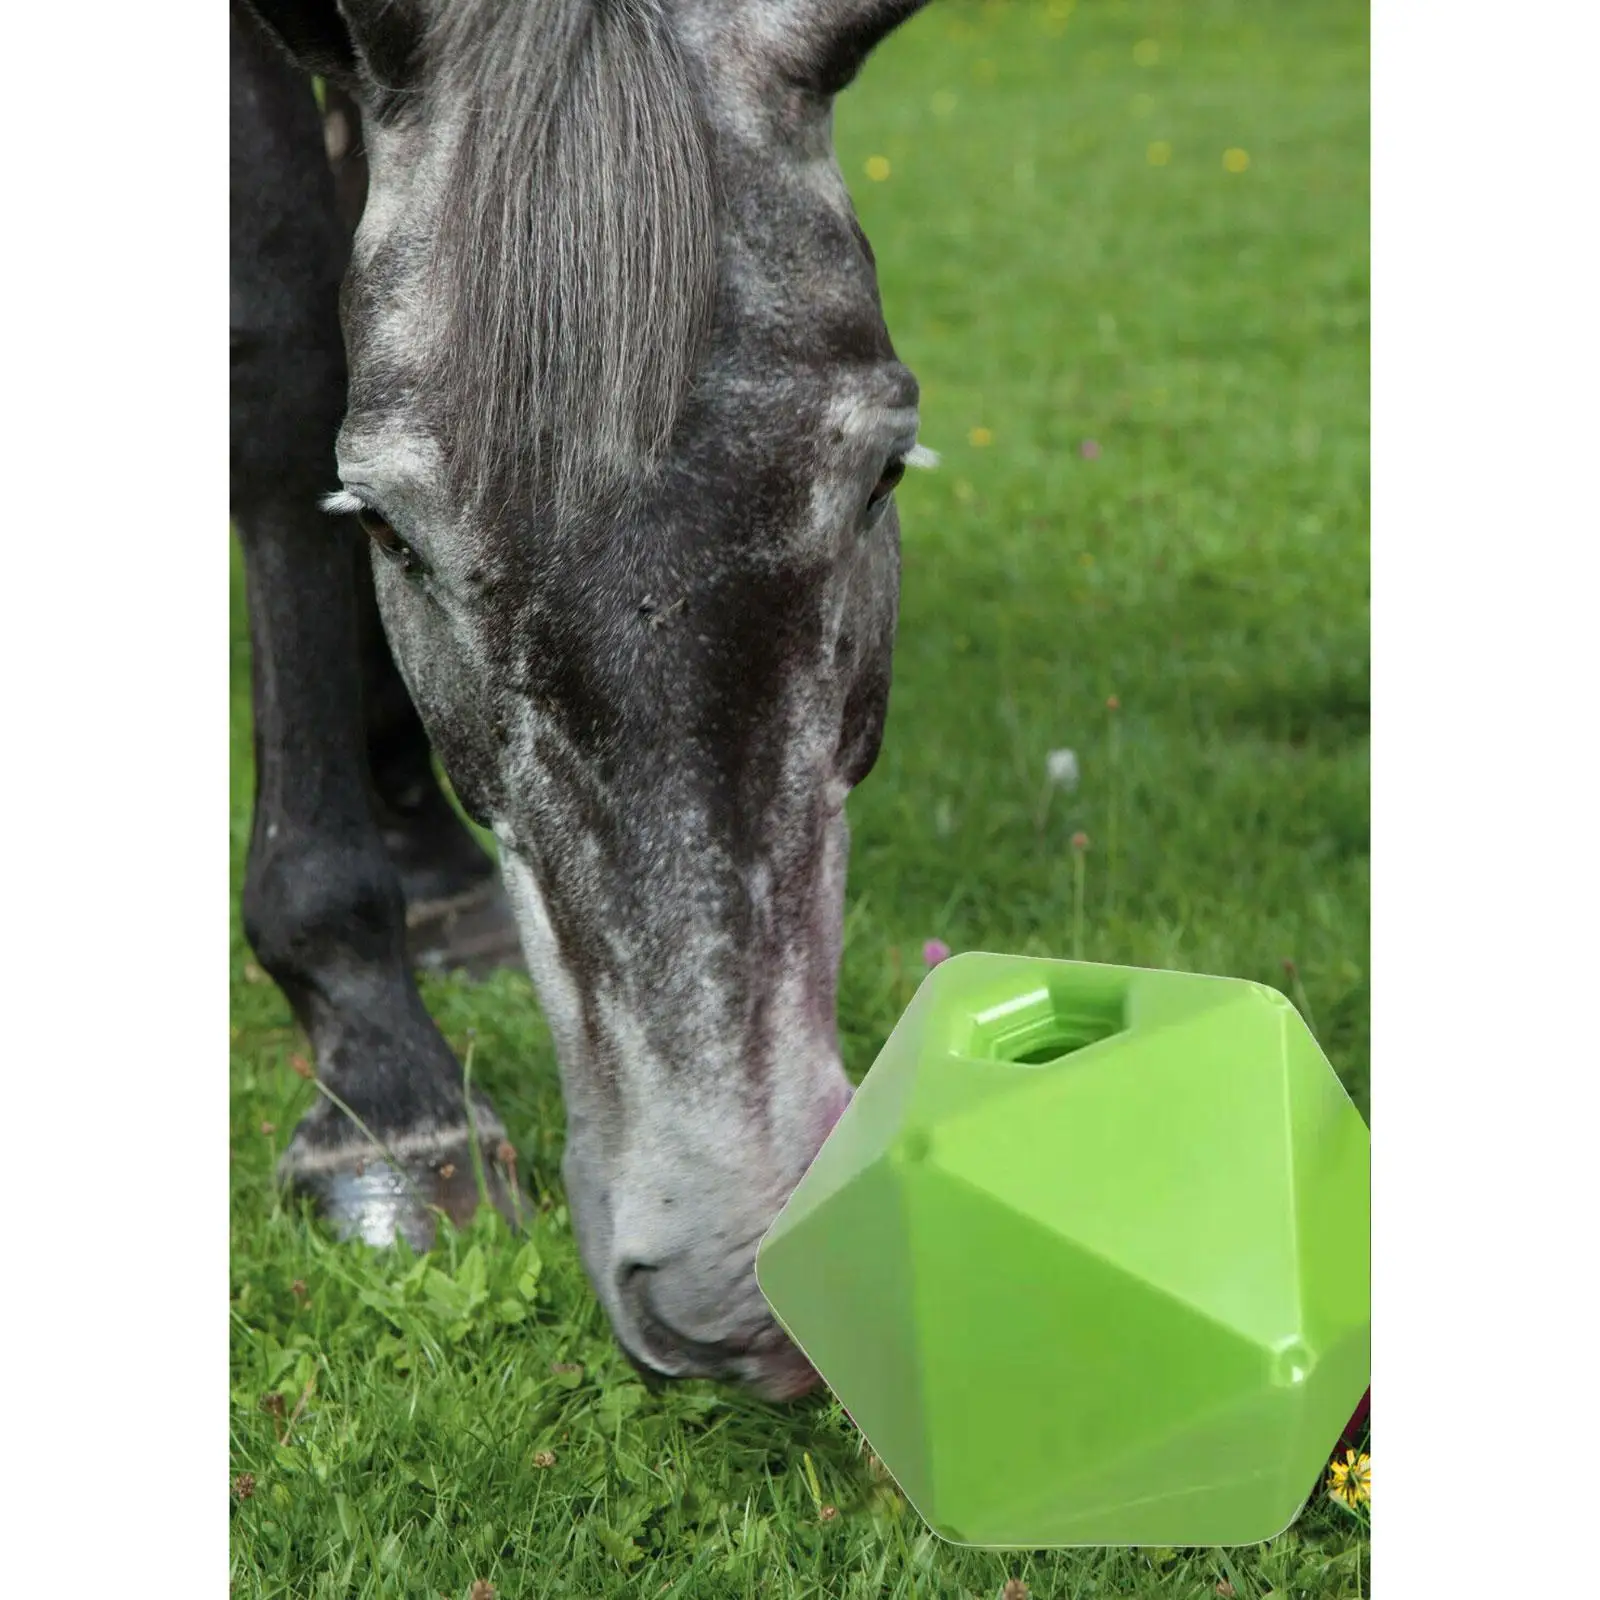 Fun Horse Treat Ball Feeding Toys Supplies Accessories Play Hay Feeder